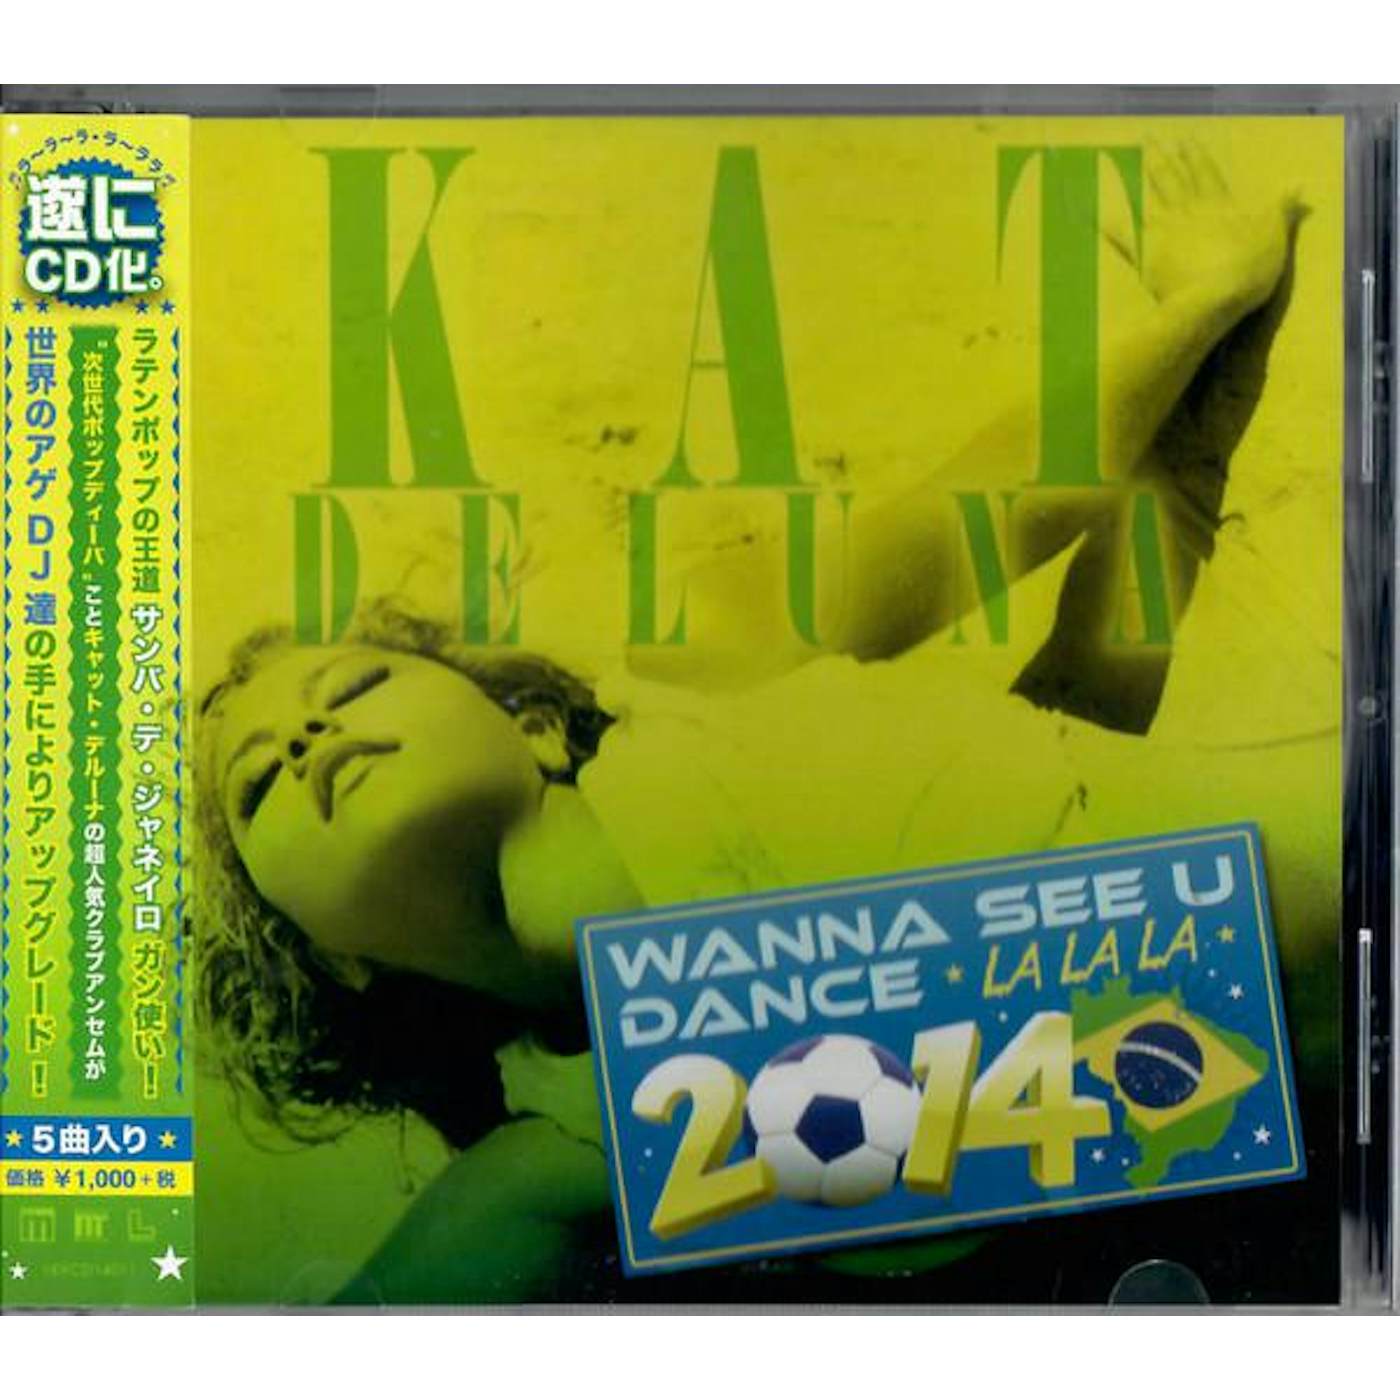 Kat Deluna WANNA SEE U DANCE: LA LA LA 2014 CD